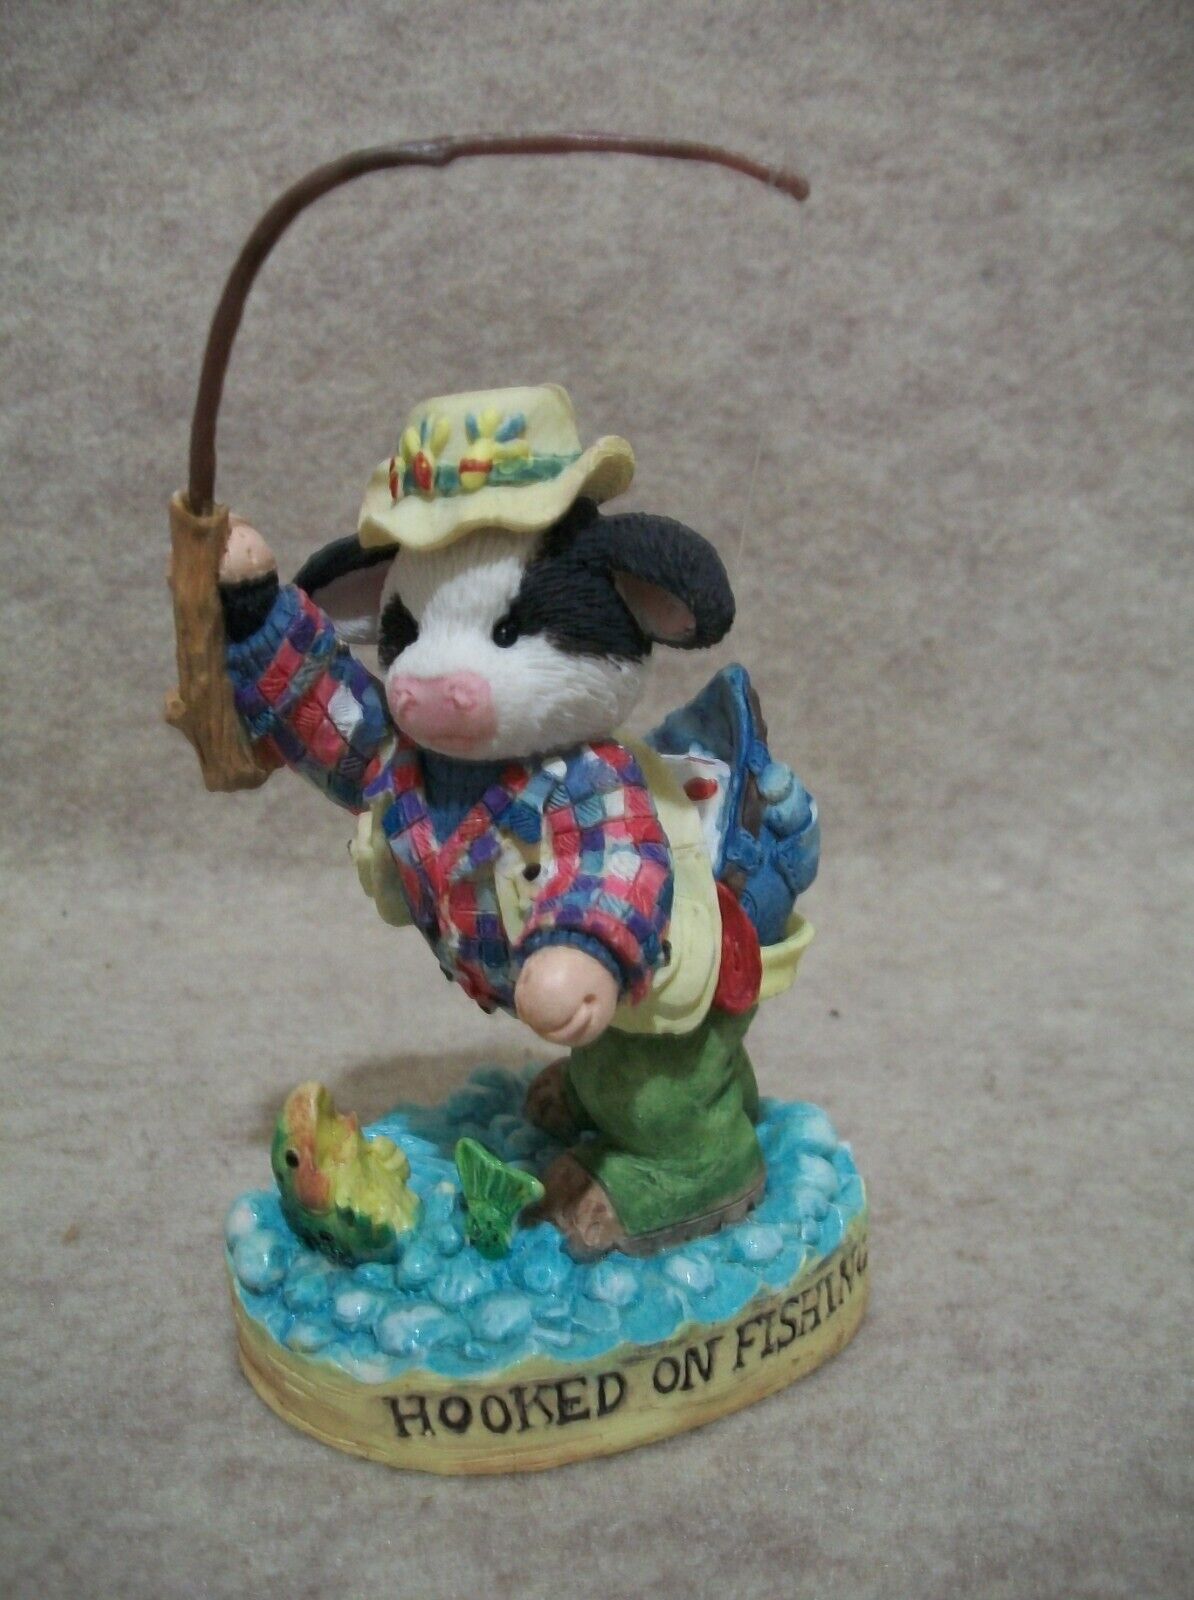 Hooked On Fishing - Fishing - Mary Moo Moo Cow Figurine